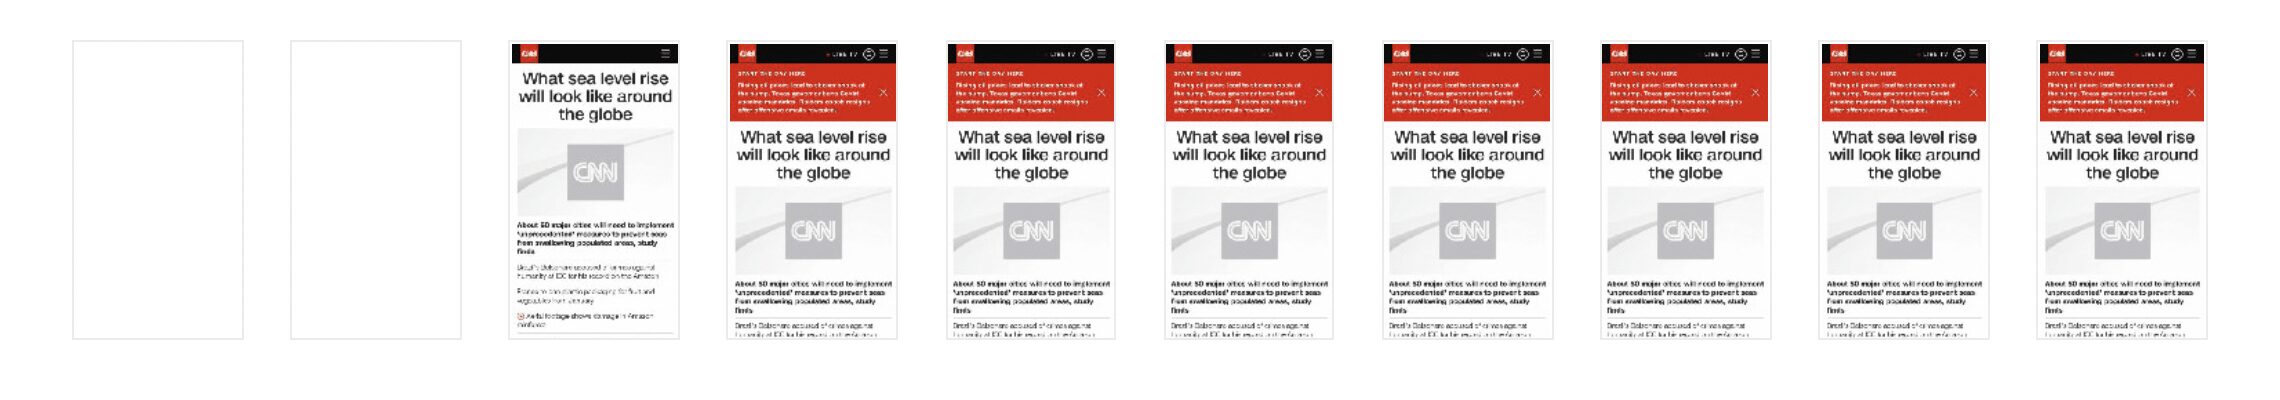 Core Web Vitals - Render Timeline - CNN